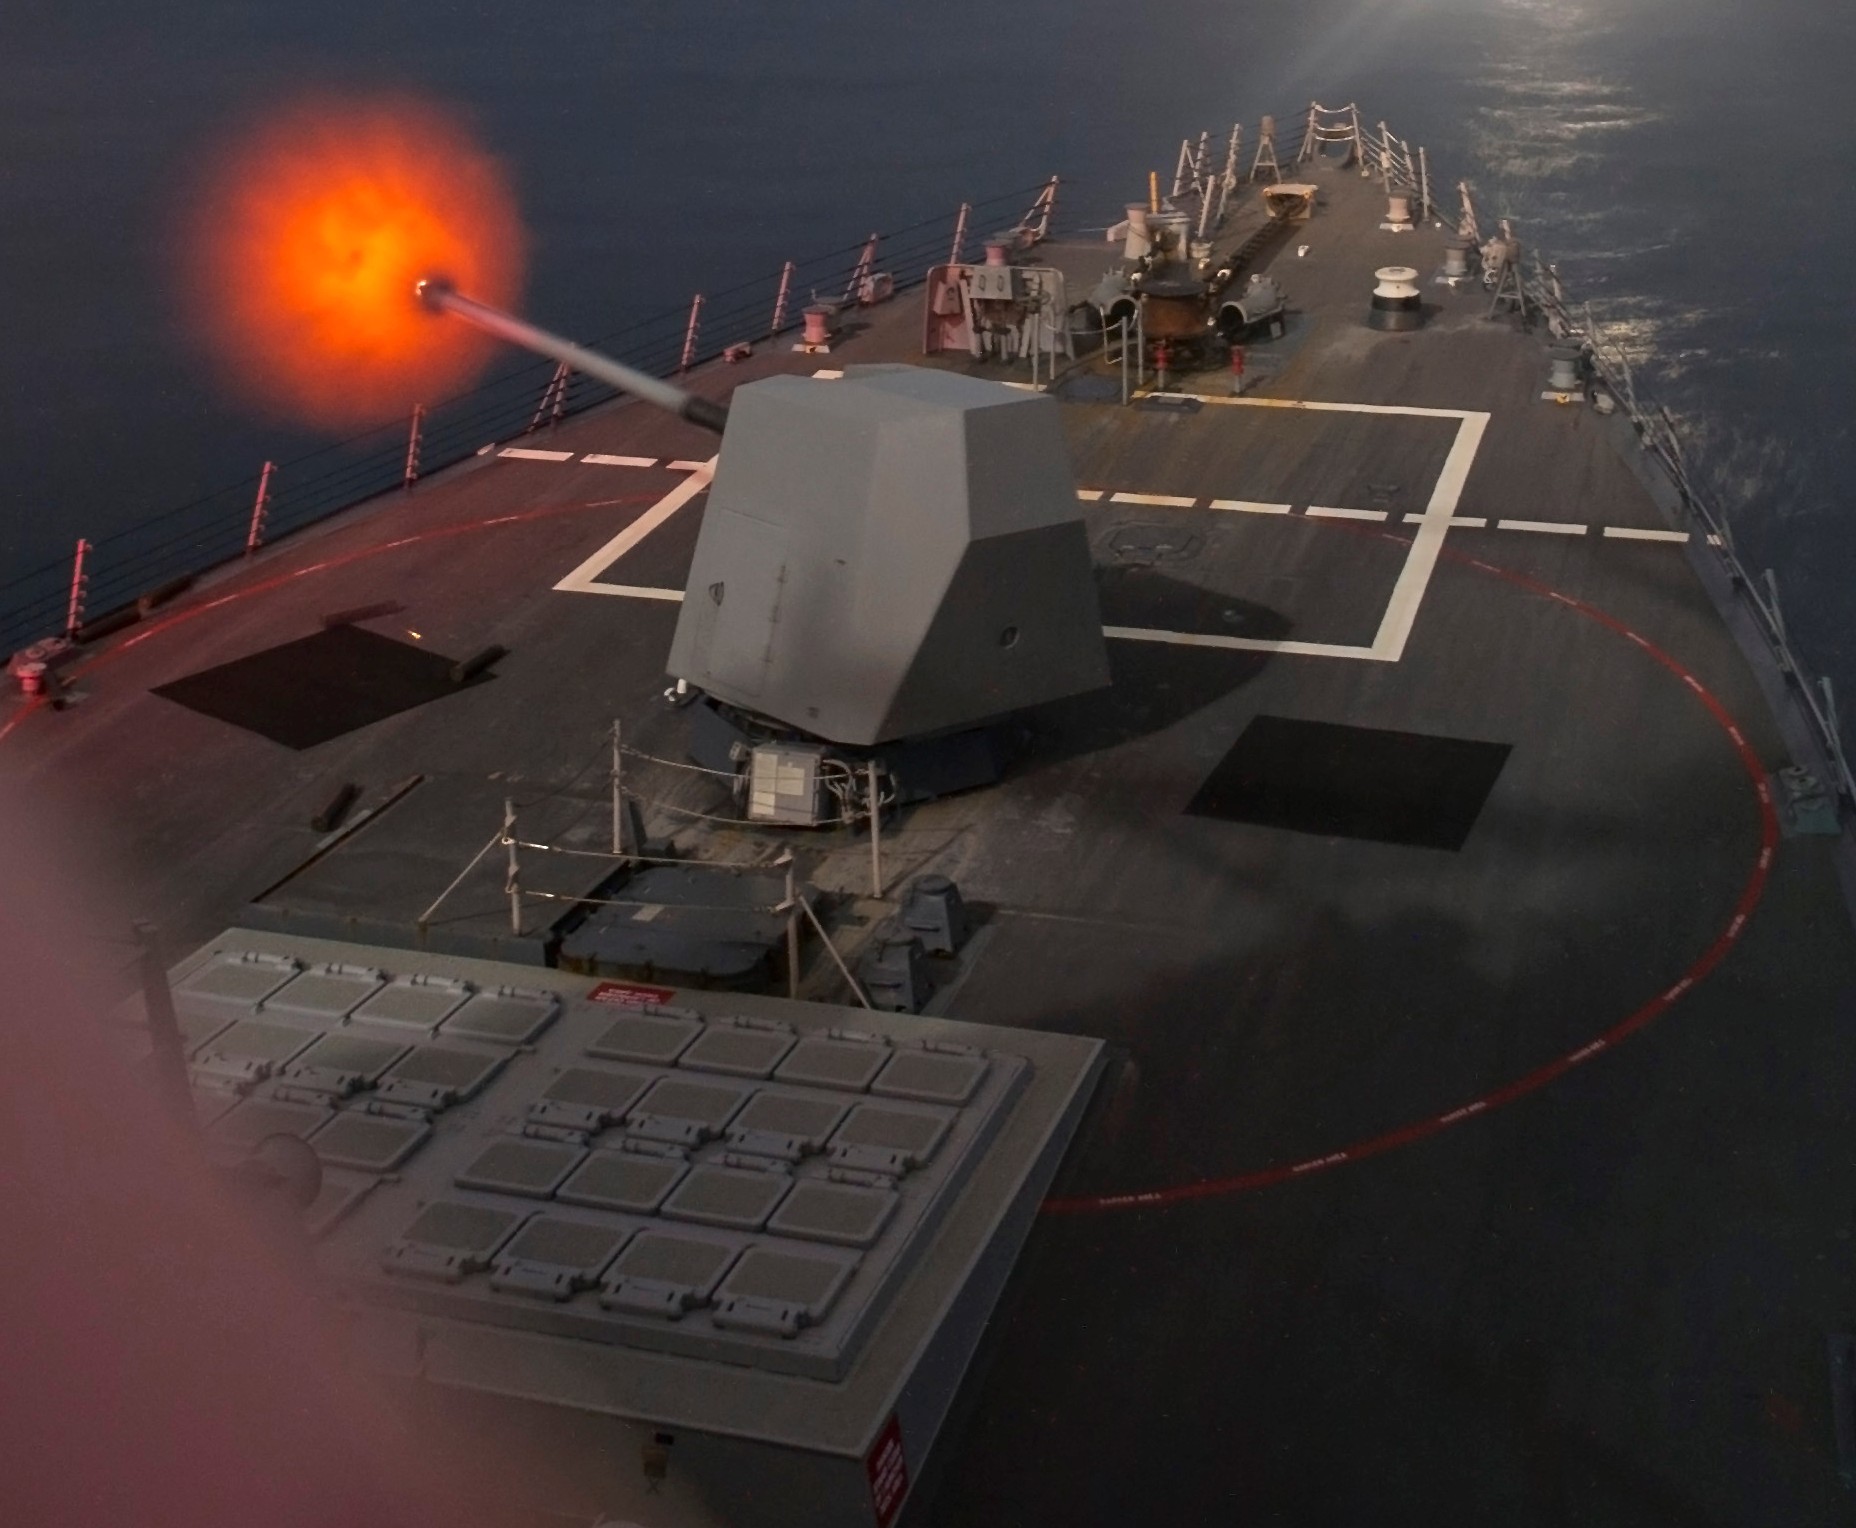 ddg-103 uss truxtun arleigh burke class guided missile destroyer aegis us navy 52